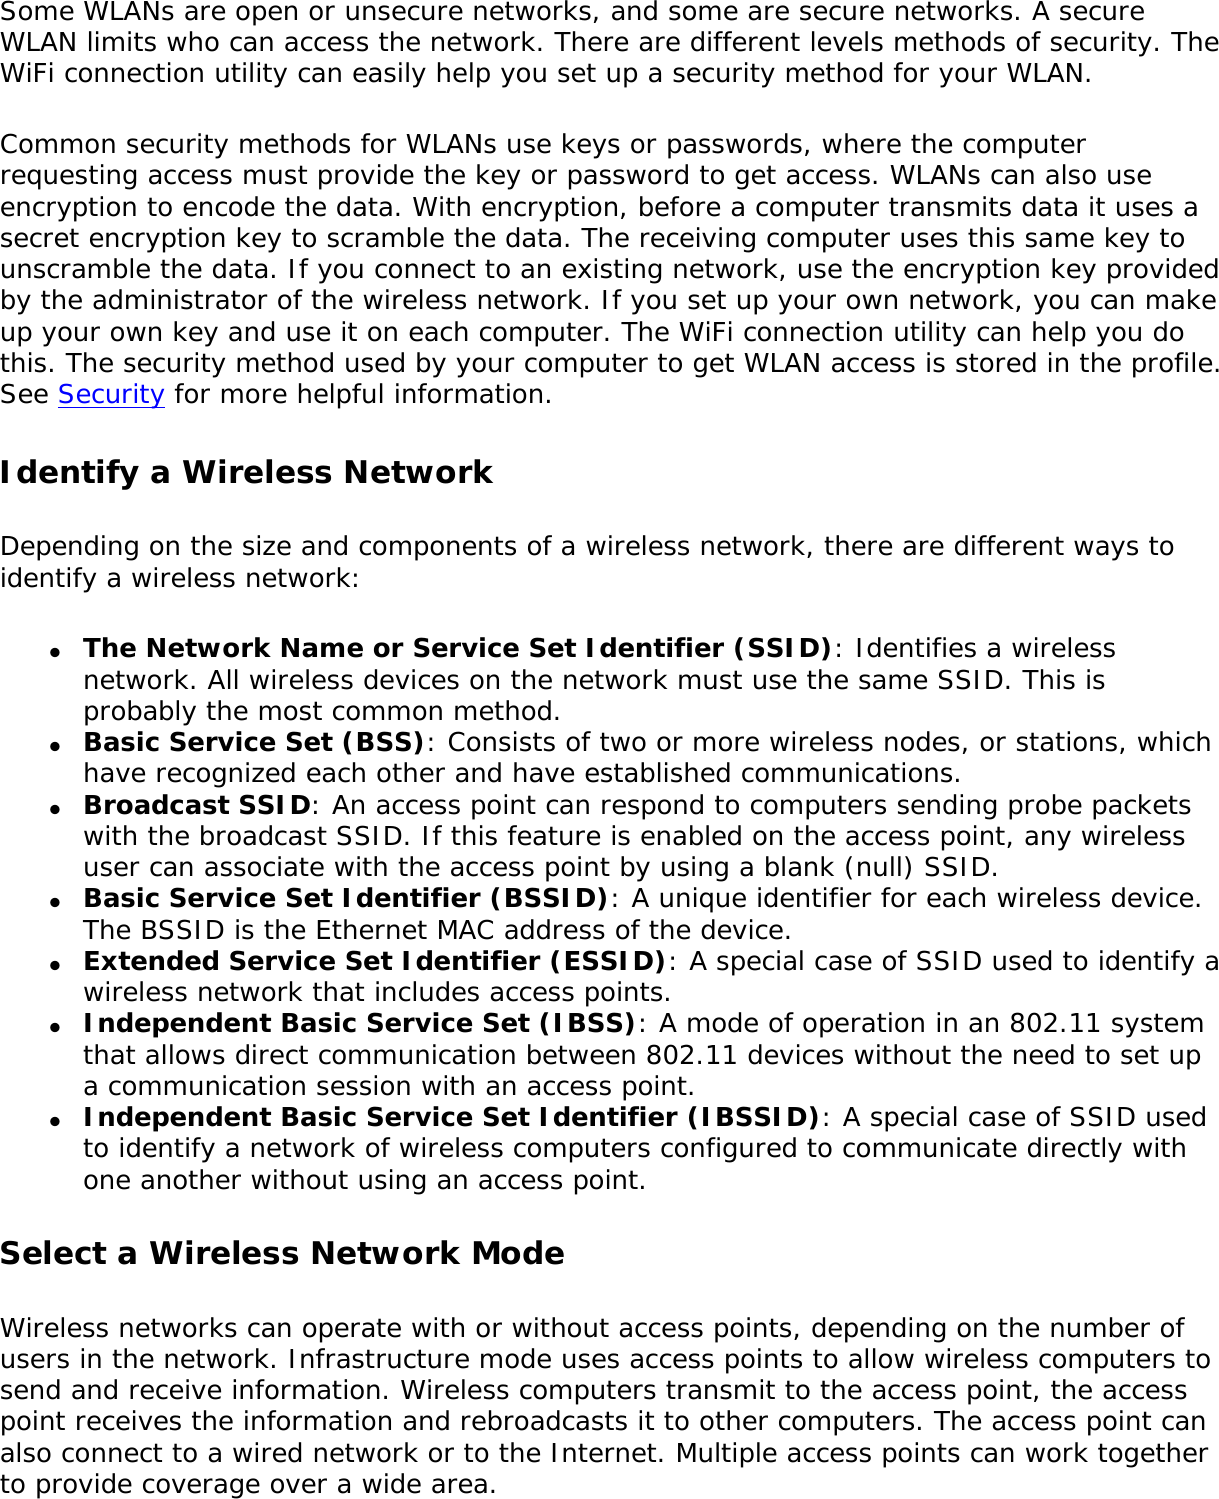 Page 86 of Intel 112BNHU Intel Centrino Wireless-N 1000 User Manual Contents